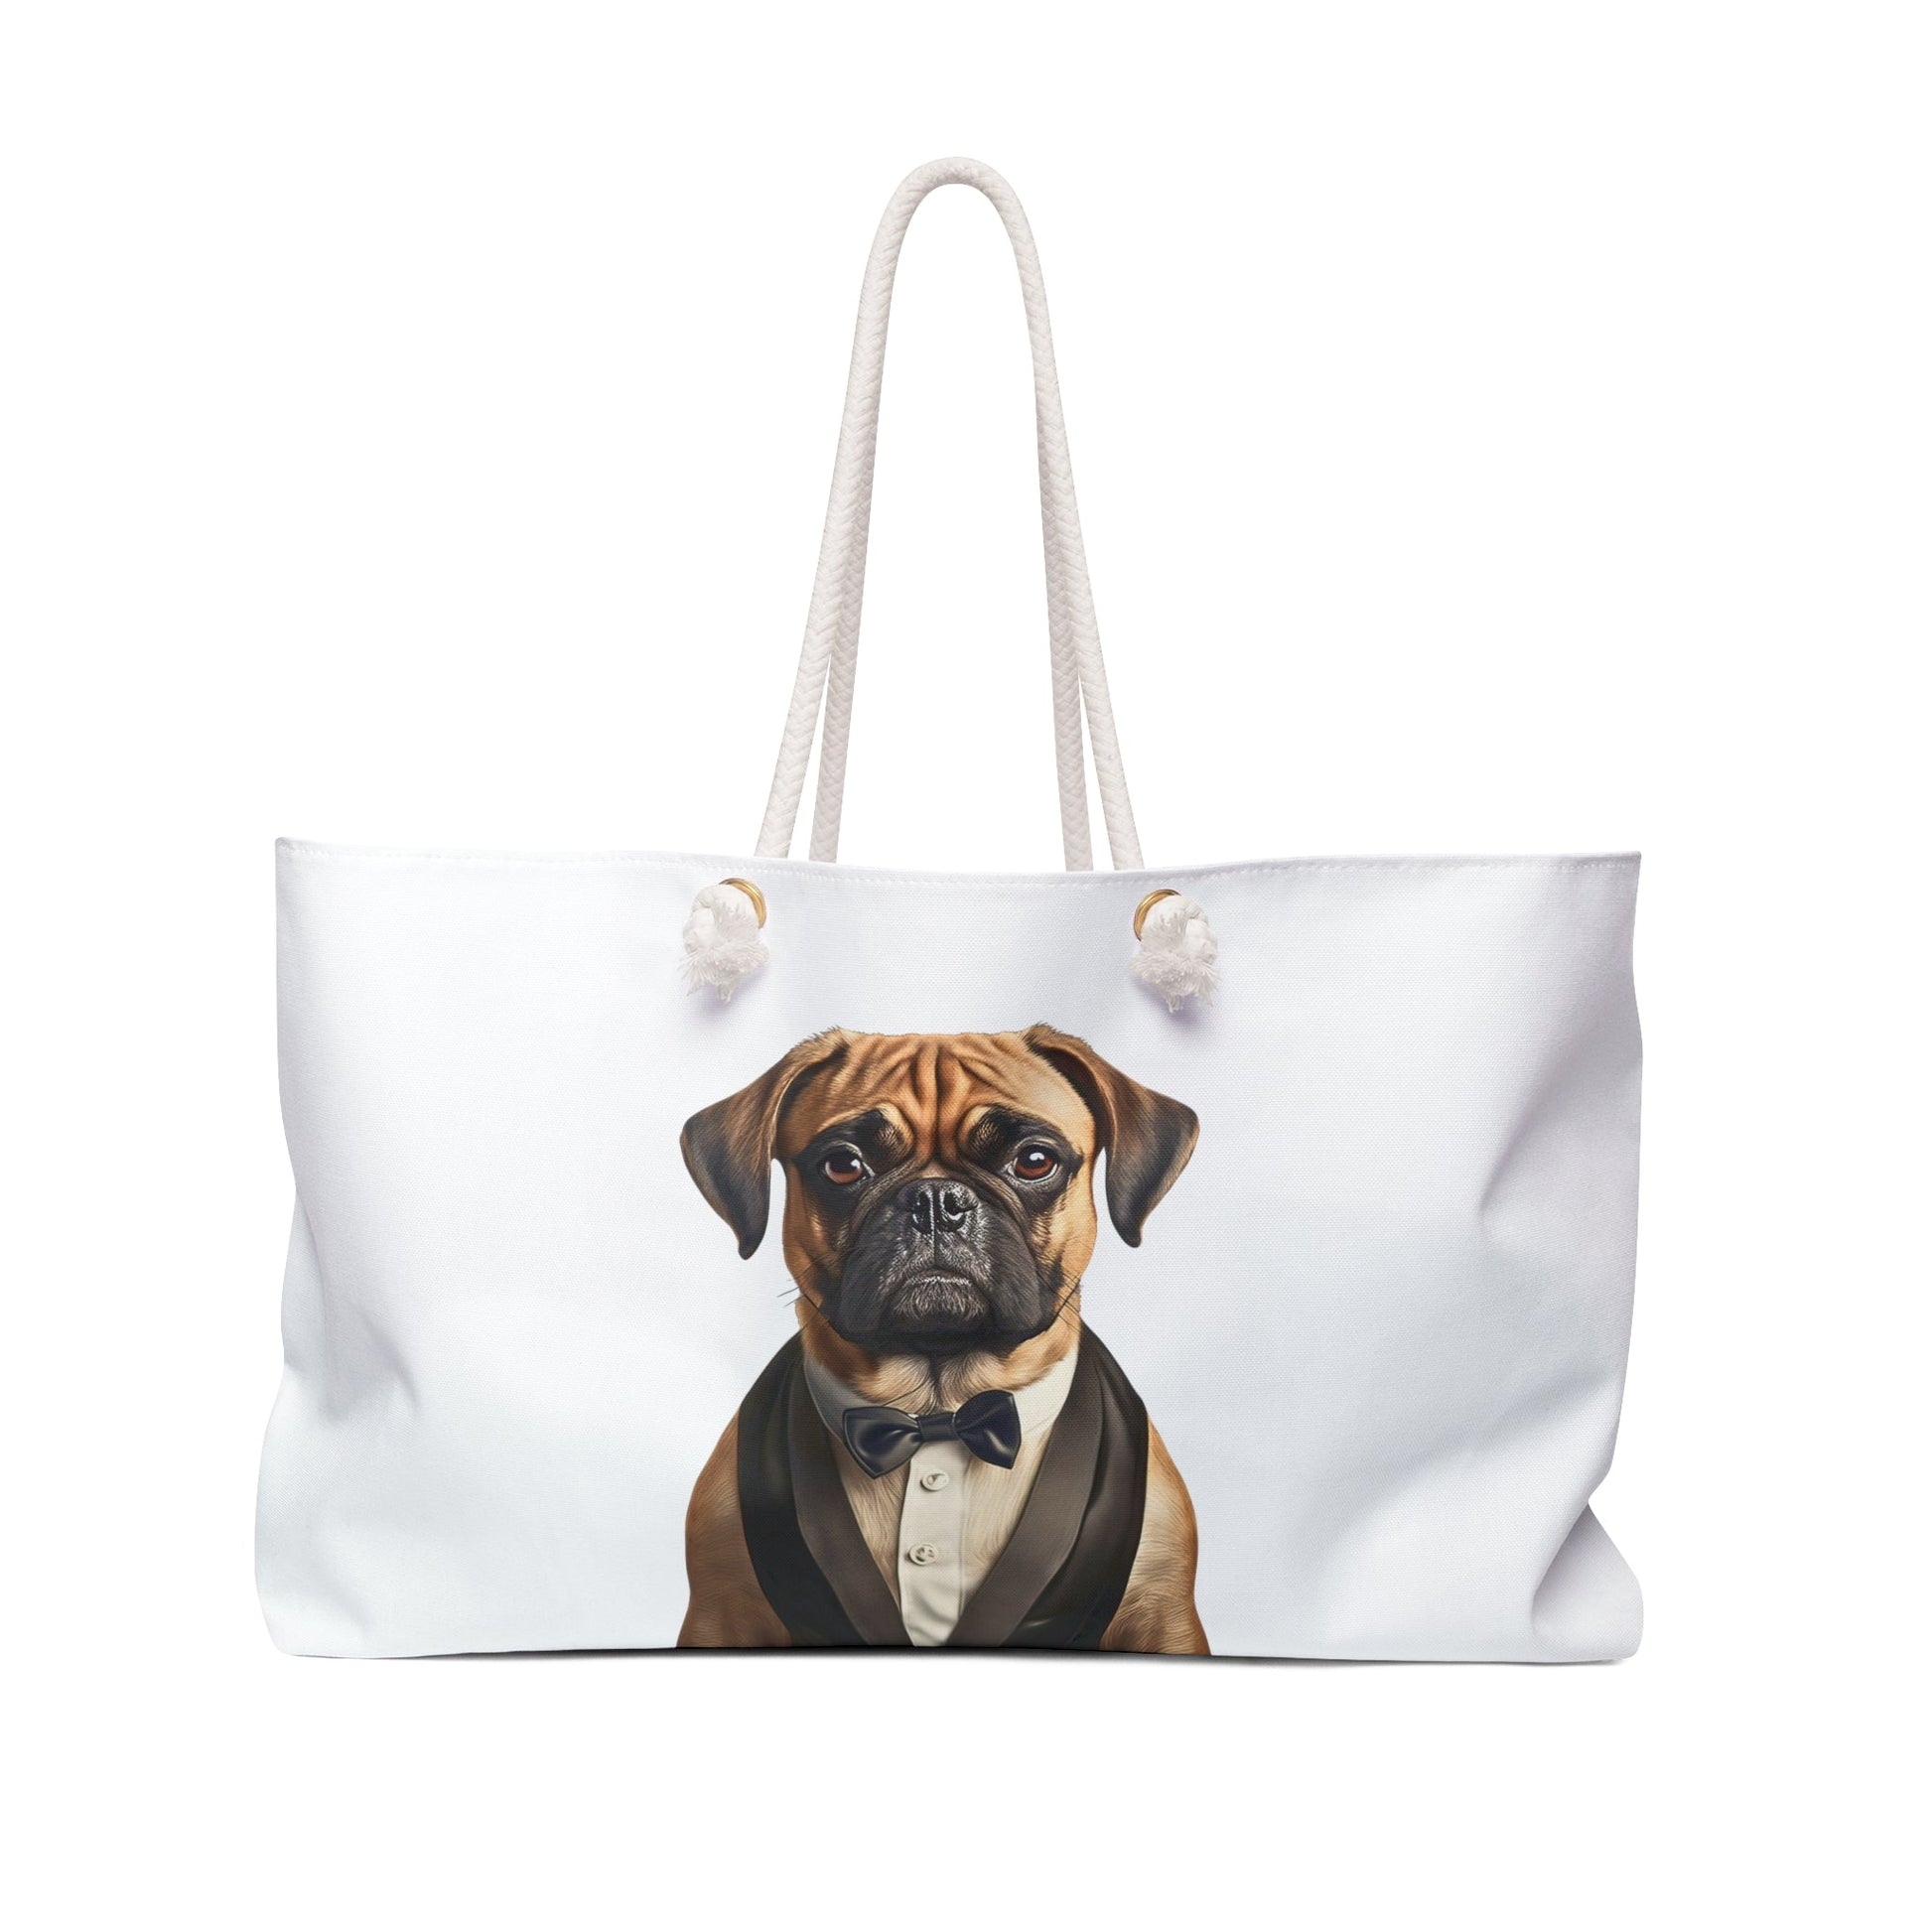  PETER Fashionable Weekender Bags |Travel Bag